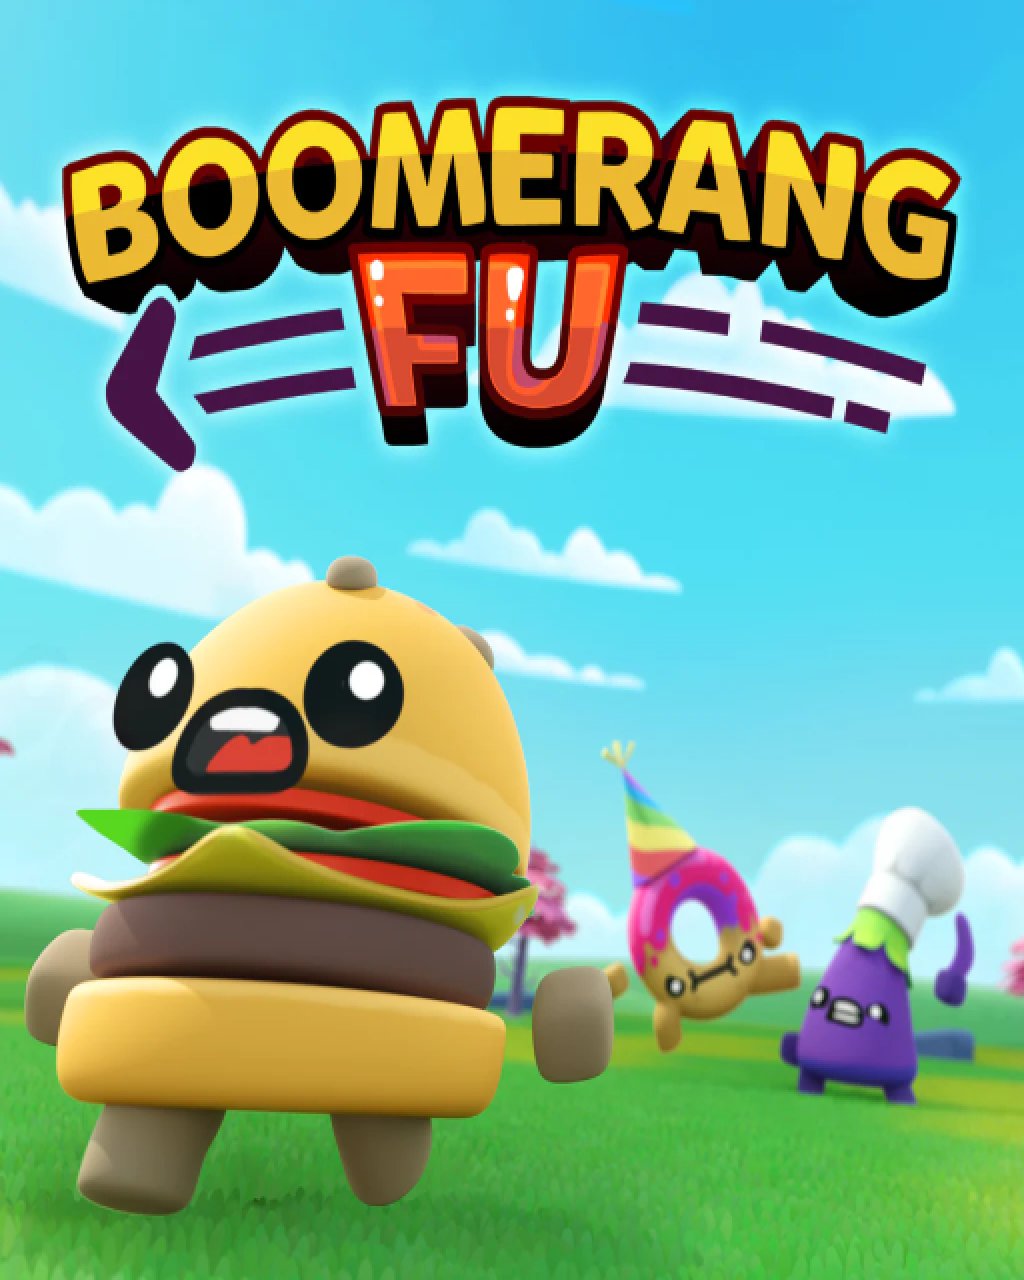 ESD Boomerang Fu